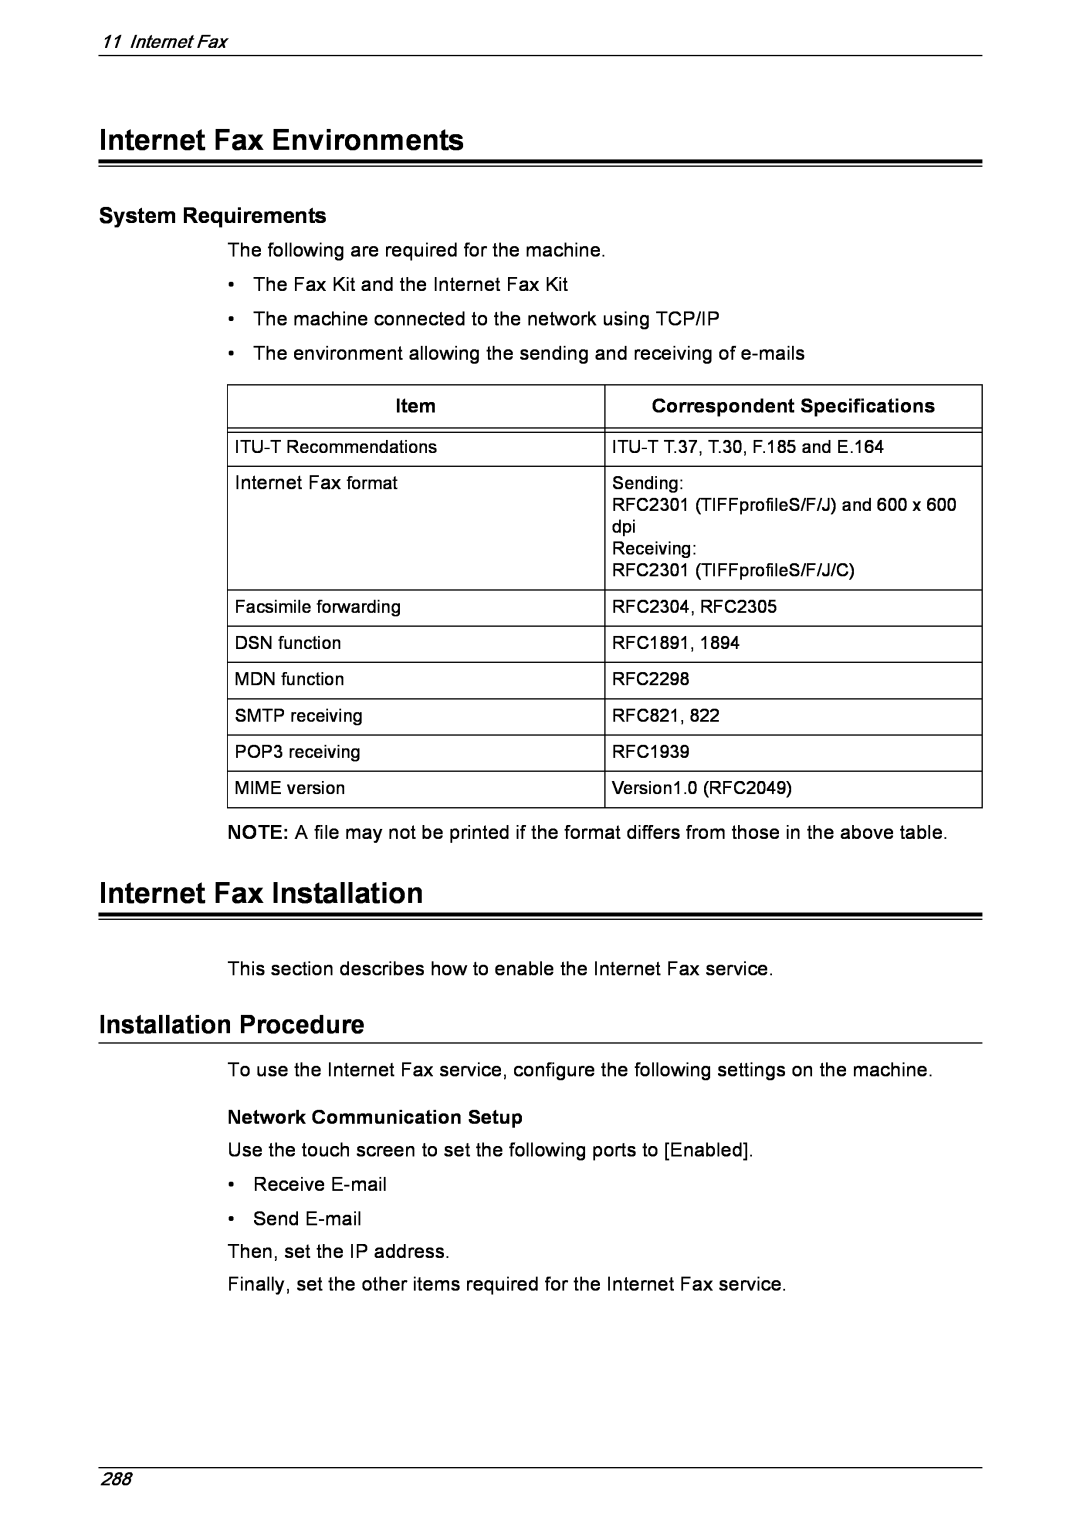 Xerox 5222 Internet Fax Environments, Internet Fax Installation, Installation Procedure, Item, Network Communication Setup 